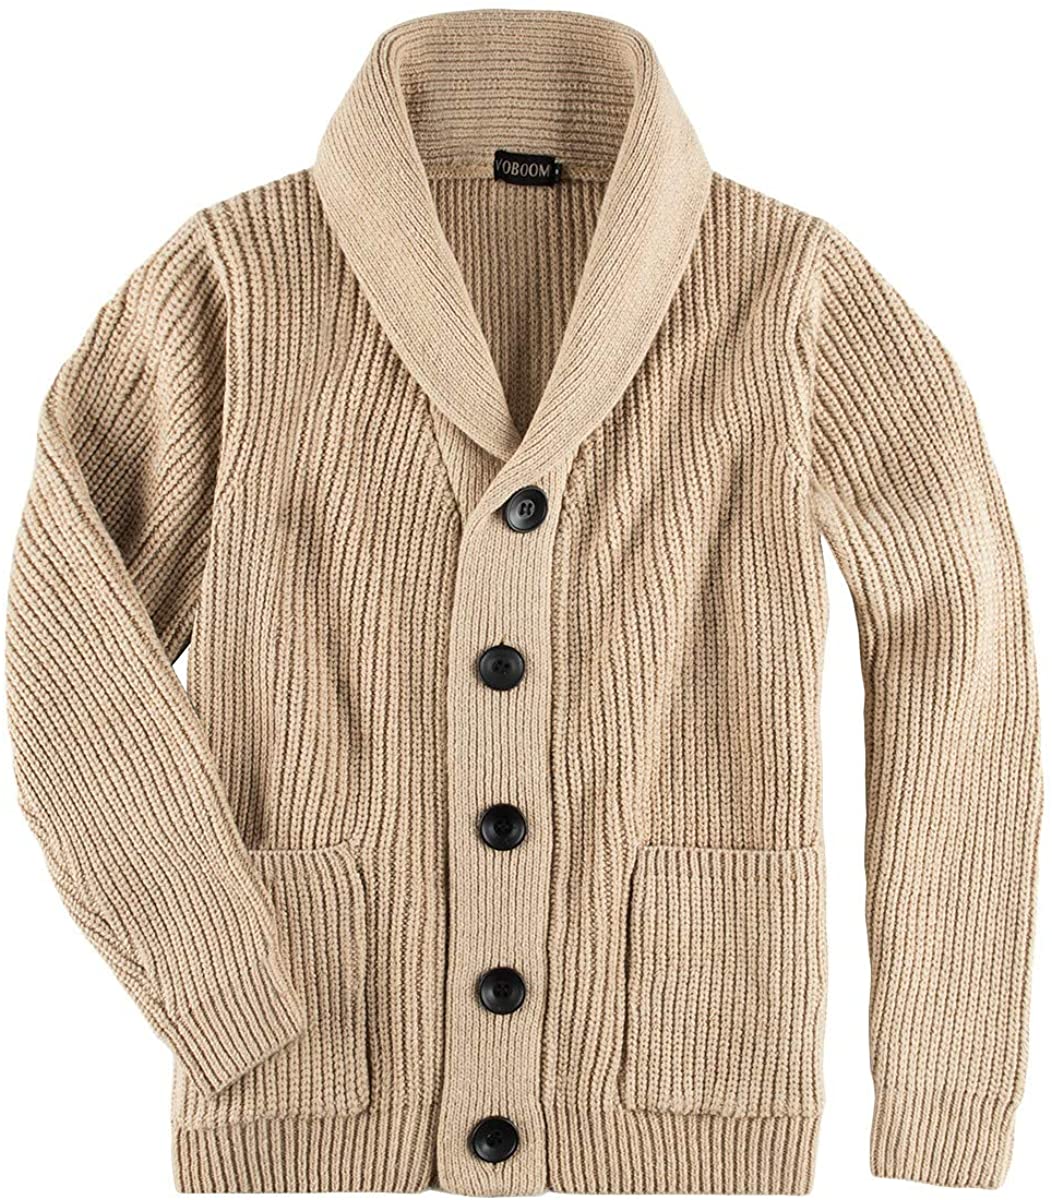 VOBOOM Men's Knitwear Button Down Shawl Collar Cardigan Sweater with ...